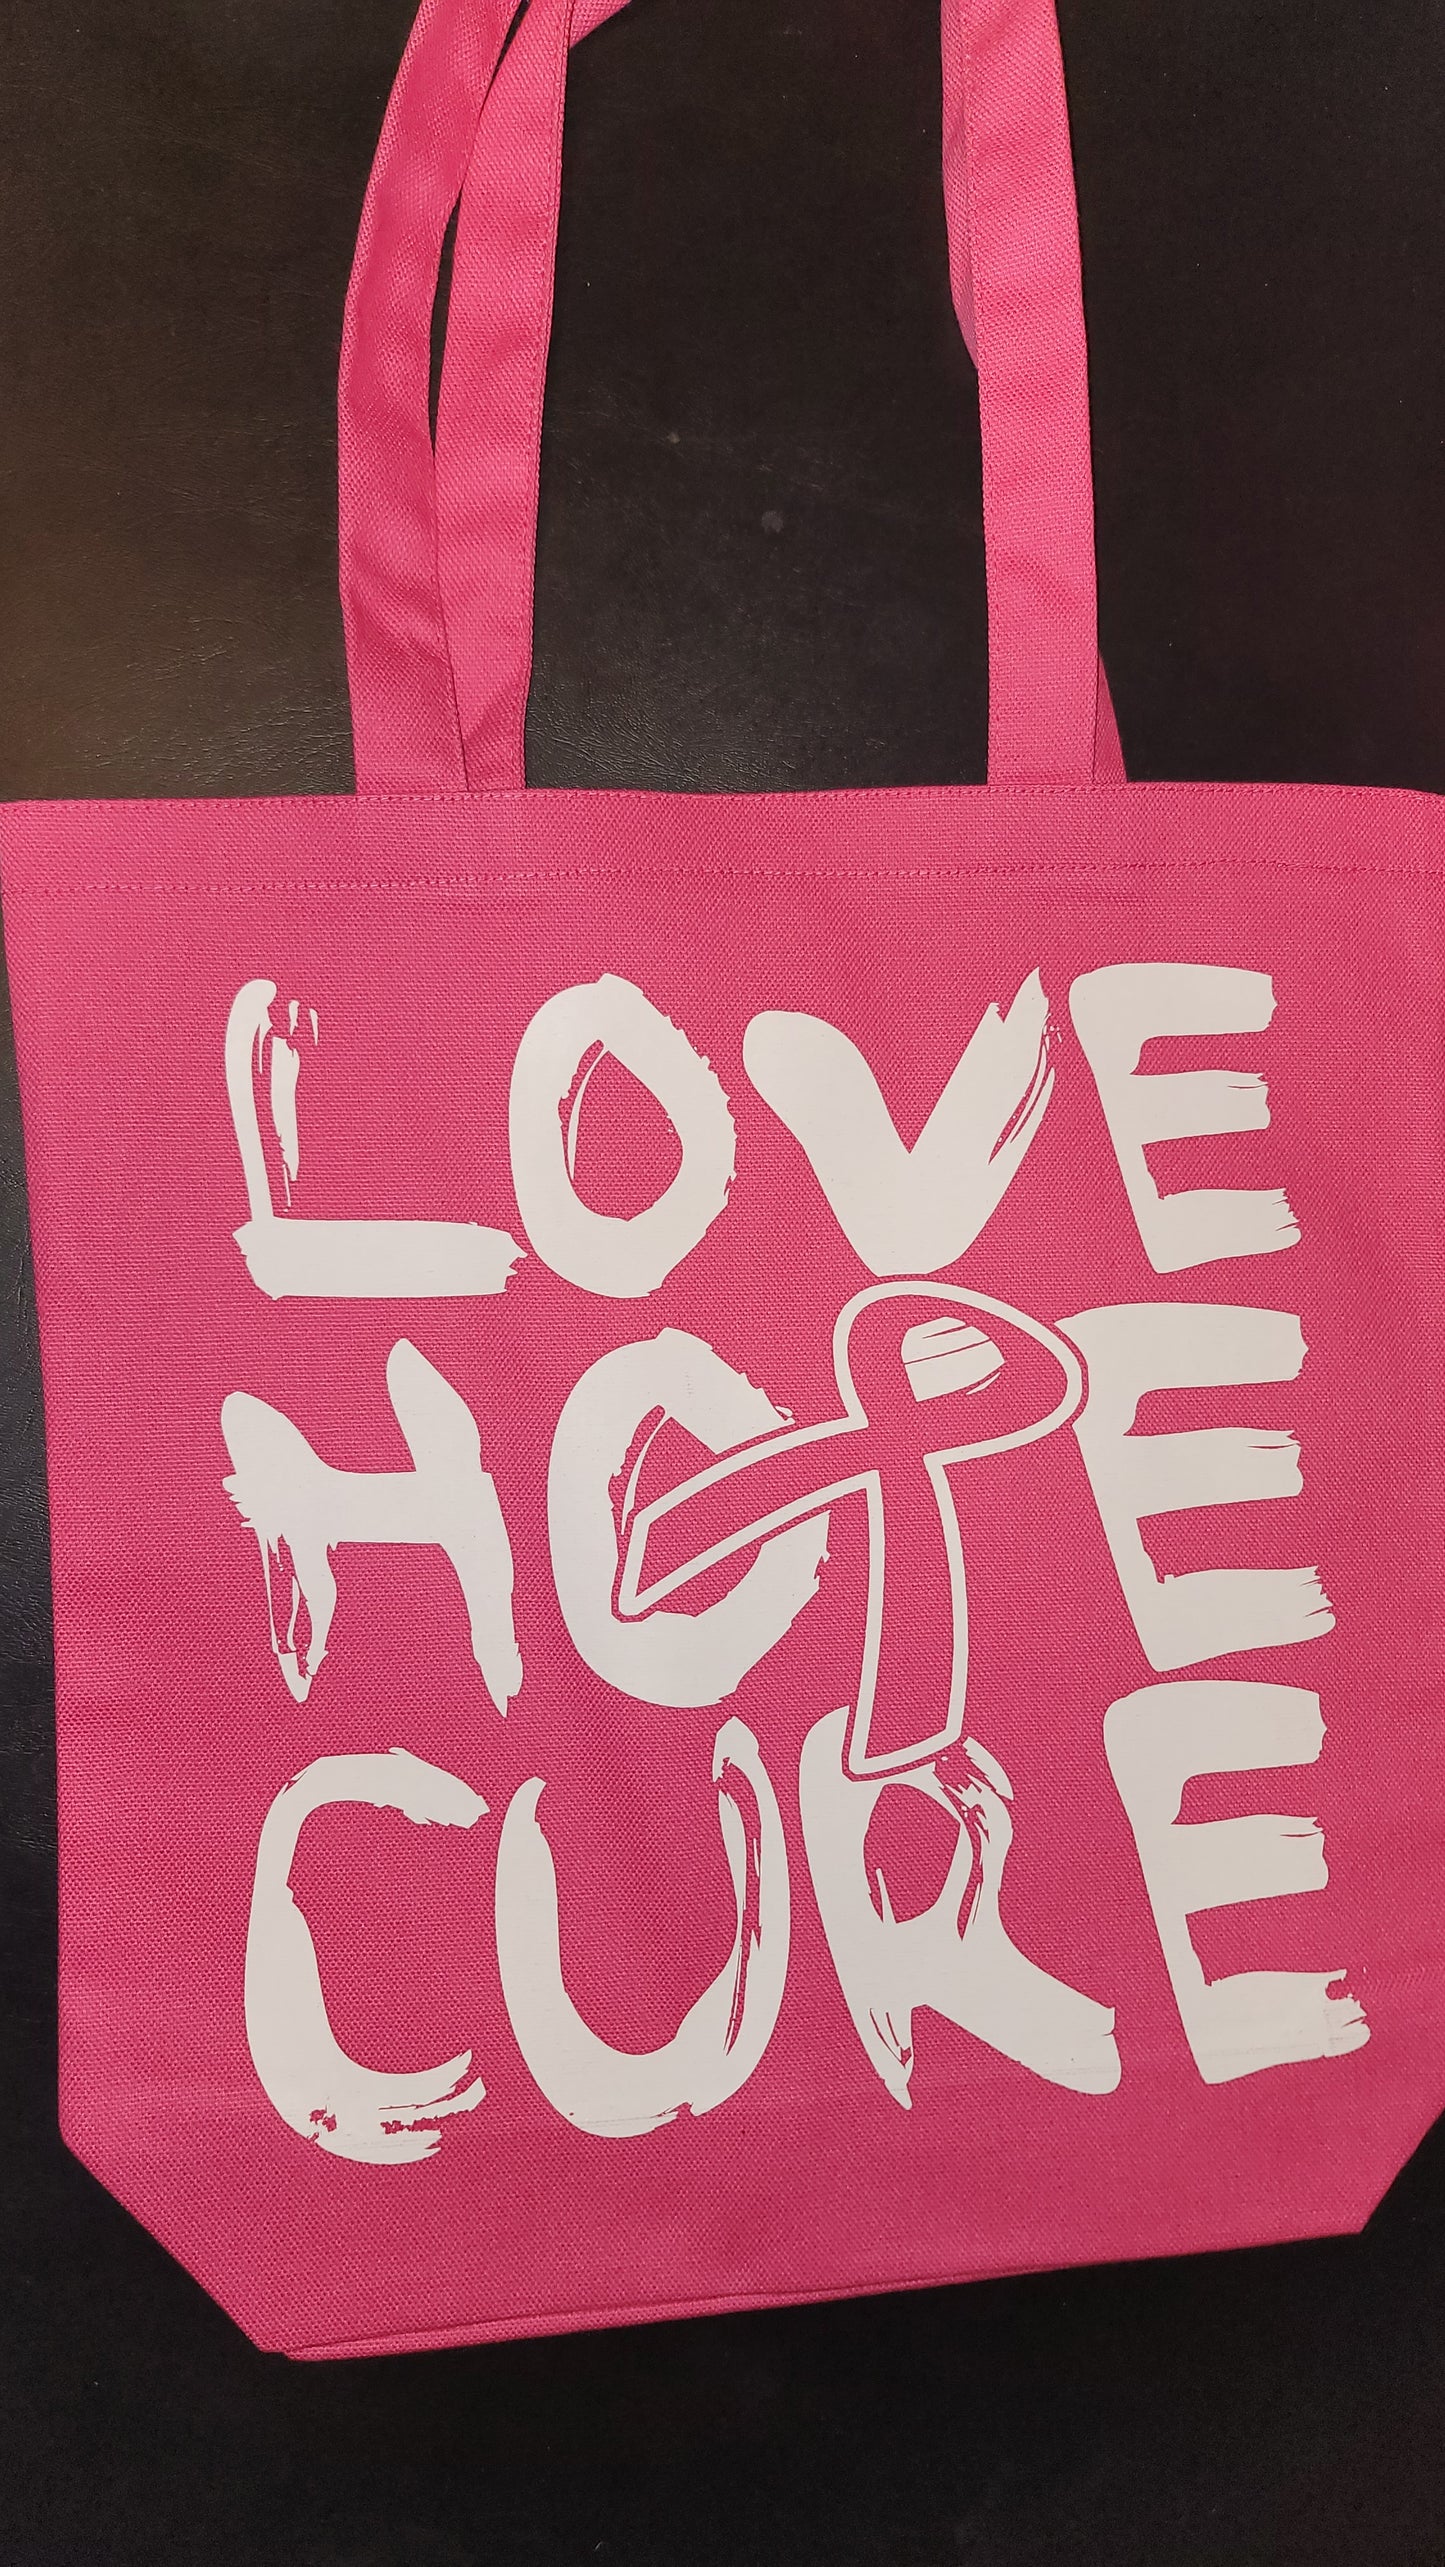 Love, Hope, Cure Tote Bag